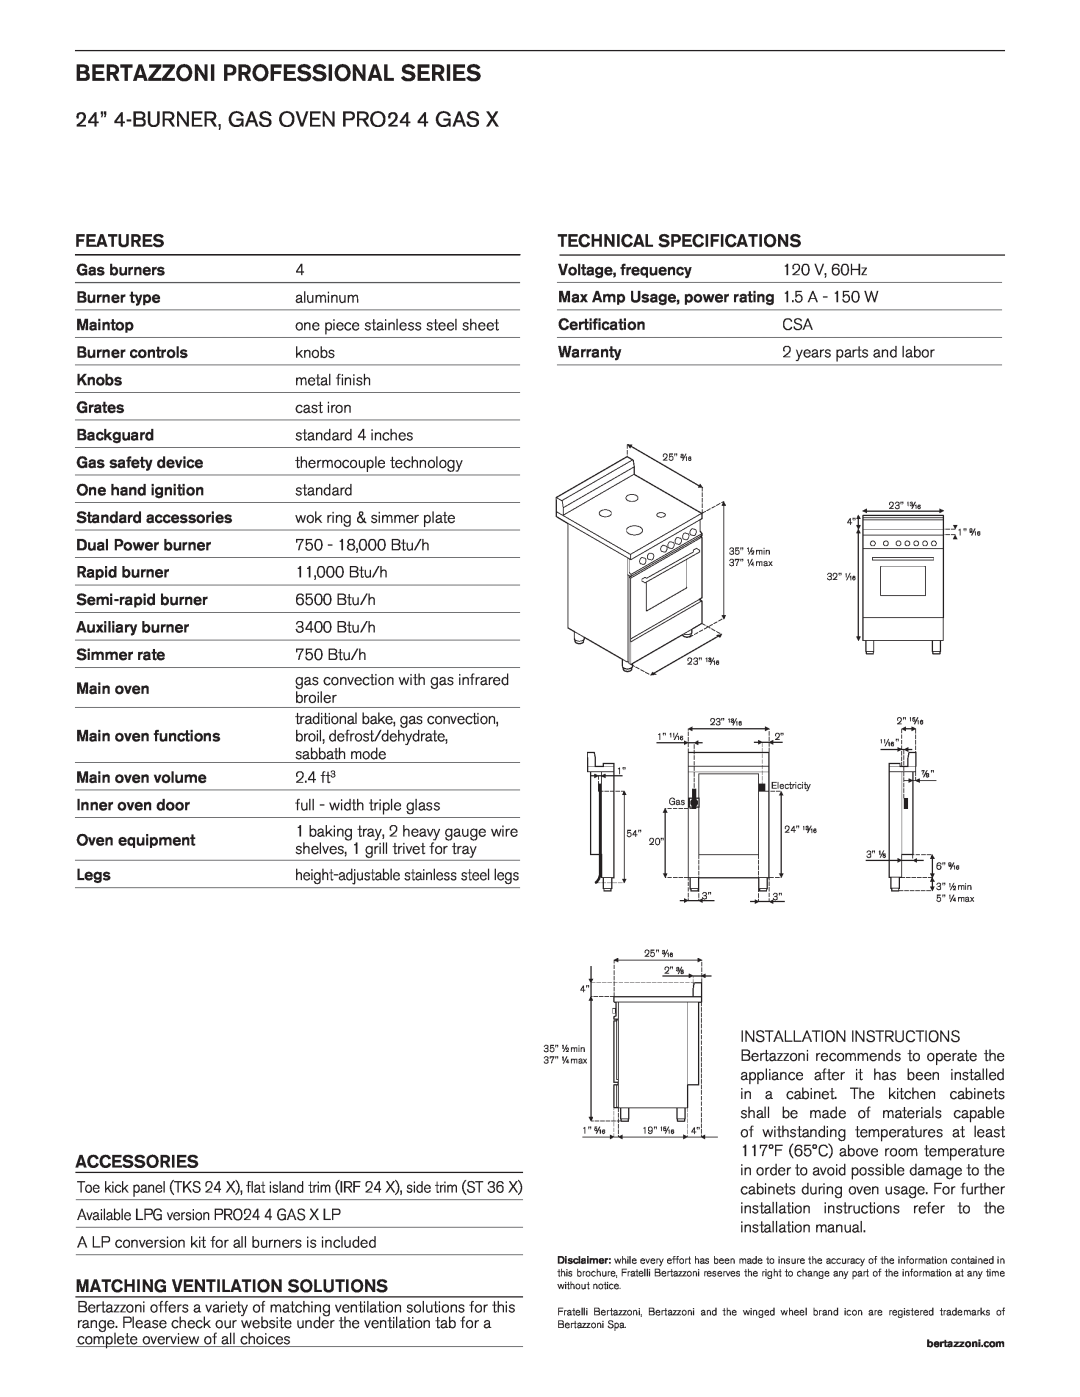 Bertazzoni PRO 24 4 GAS X manual Bertazzoni Professional Series, 24” 4-Burner,Gas Oven PRO24 4 GAS, Features, Accessories 